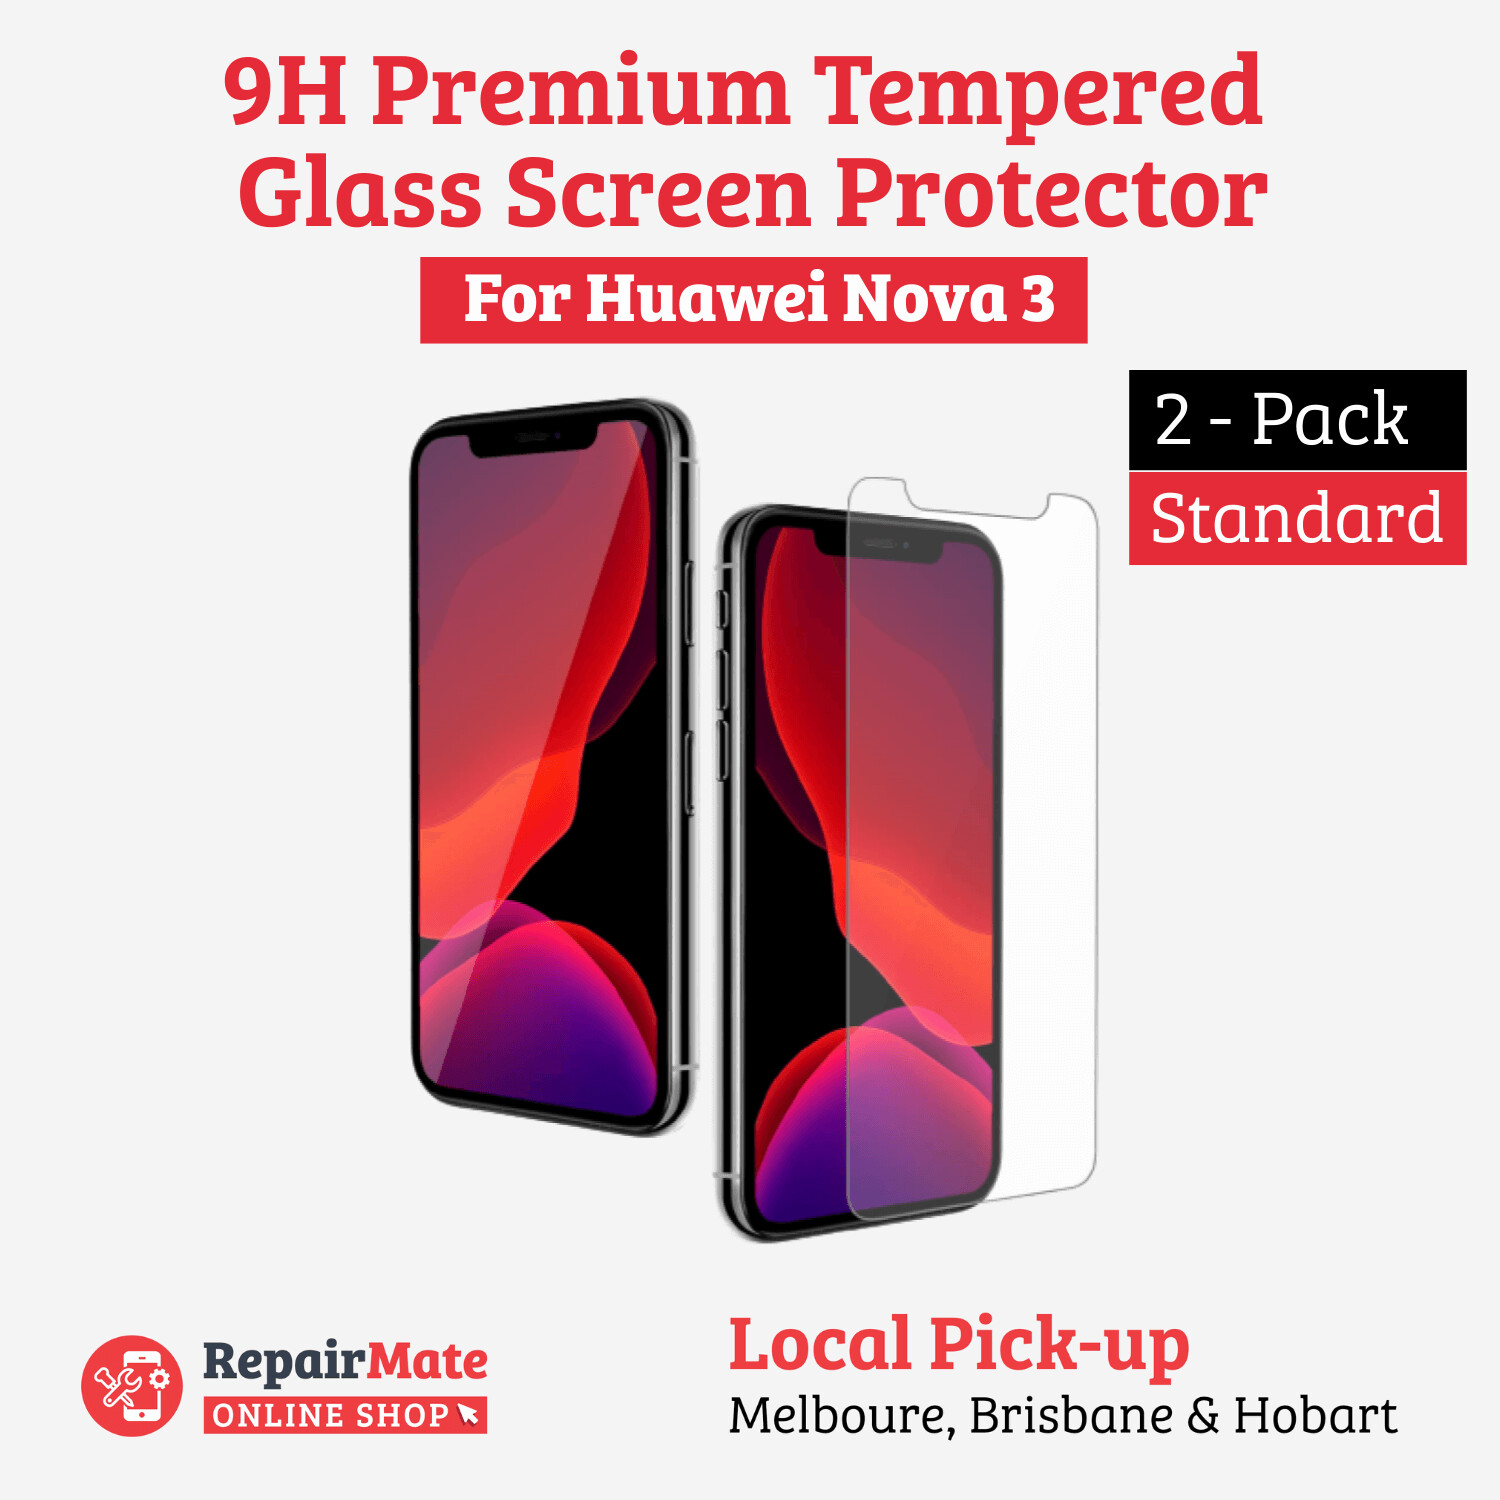 Huawei Nova 3 9H Premium Tempered Glass Screen Protector [2 Pack]